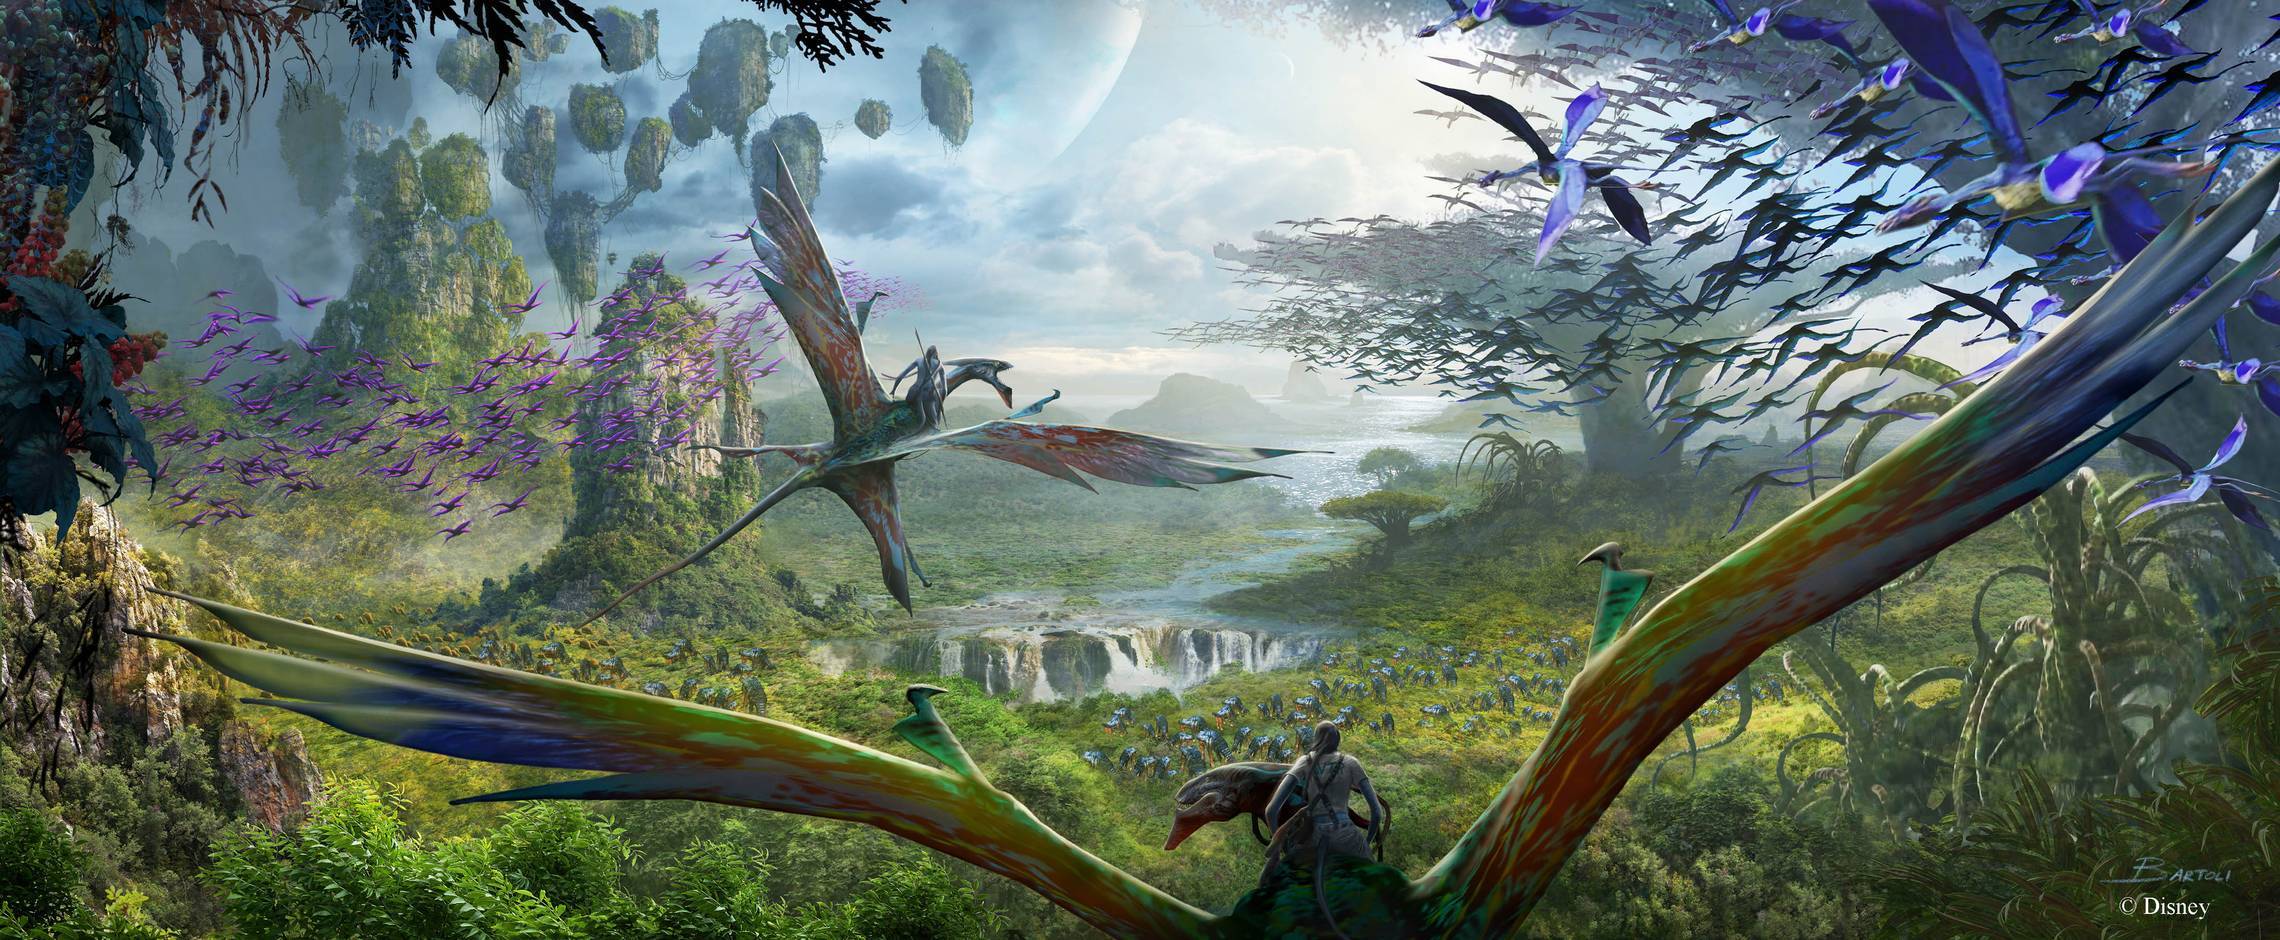 Avatar experience announced for Disneyland